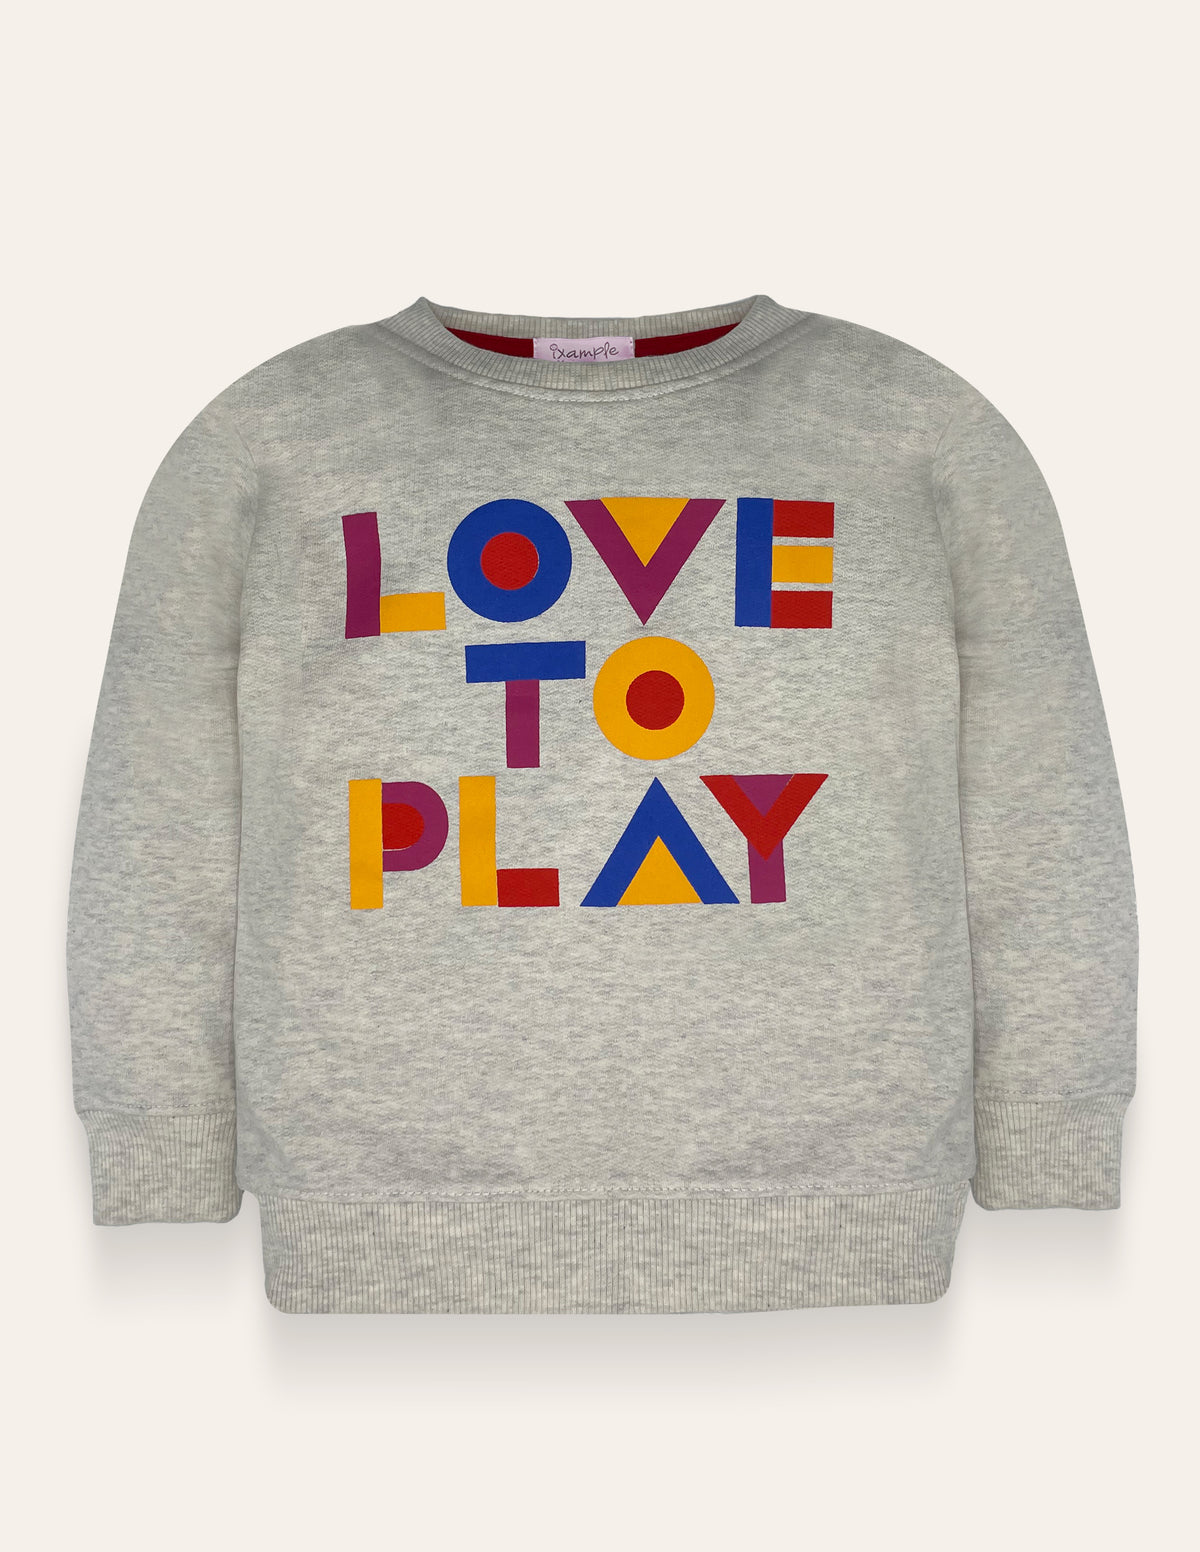 LOVE TO Play Sweatshirt